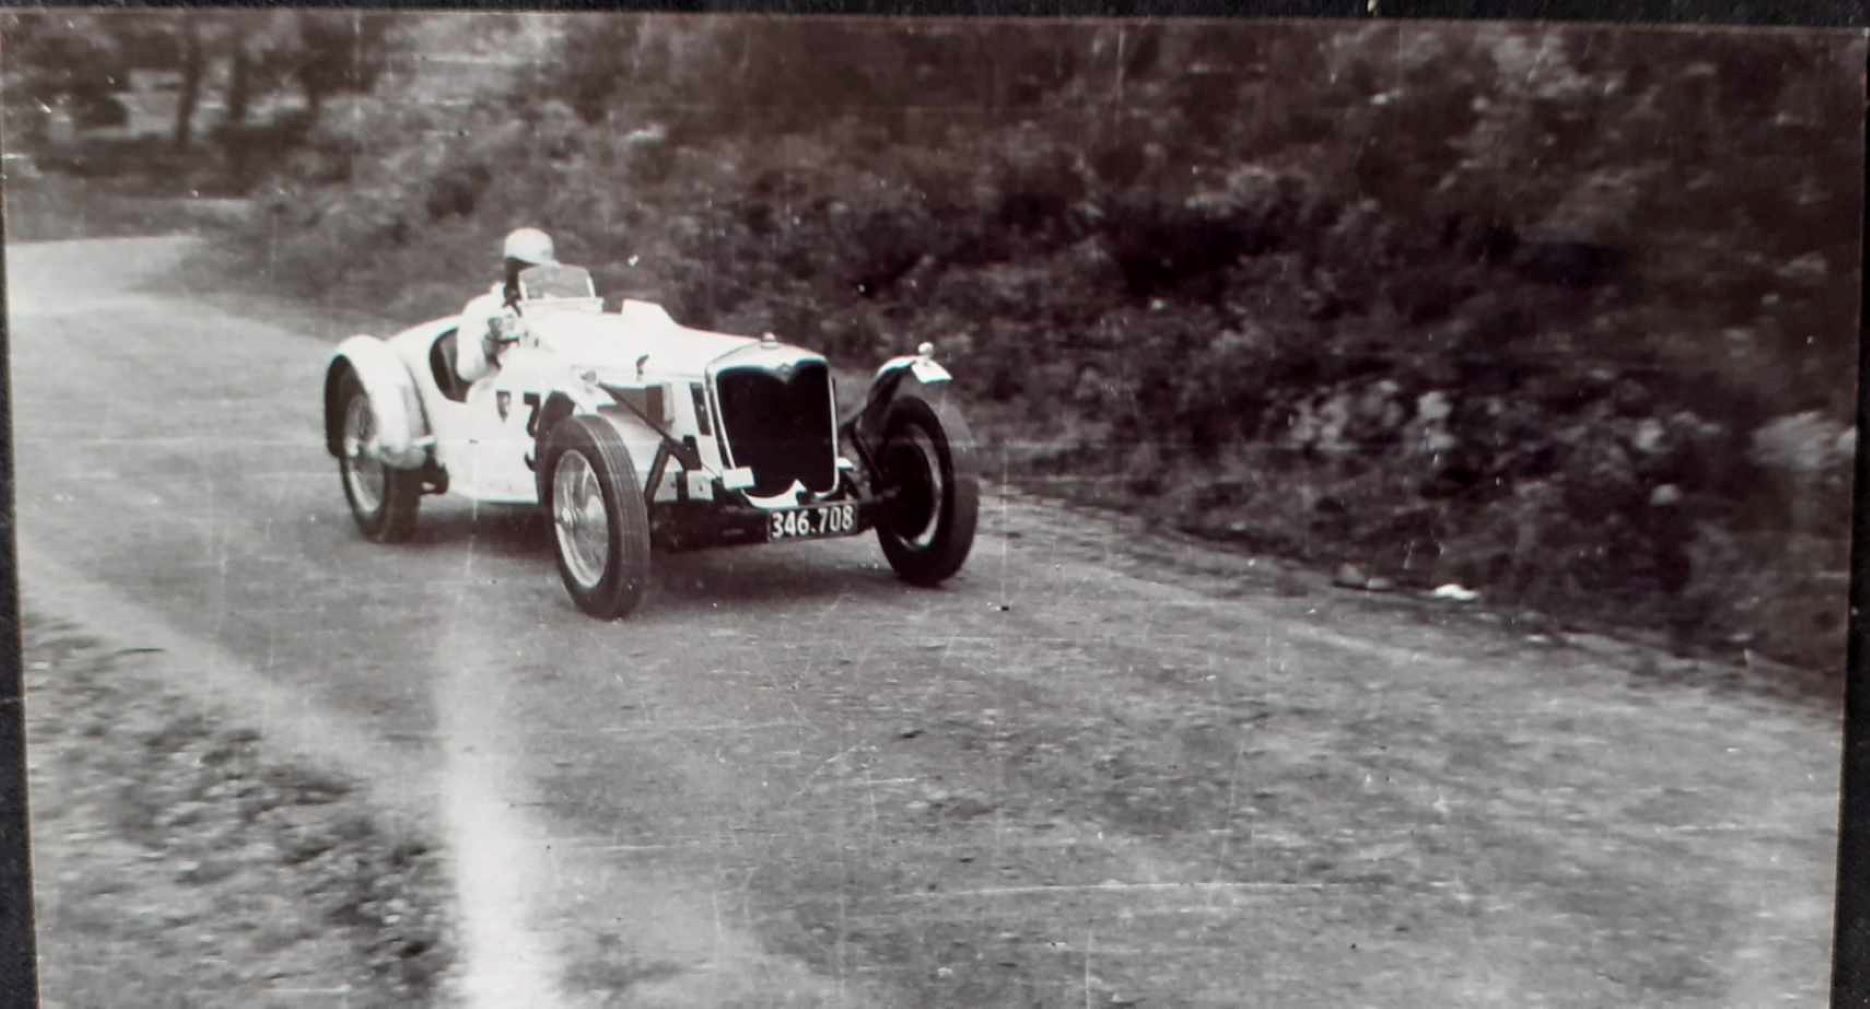 Name:  NSCC 1950 #0122 Riley Race #3 Q at Hill Climb - 346.708 1951 -56 plate 1950's - image Graeme Wel.jpg
Views: 193
Size:  178.4 KB